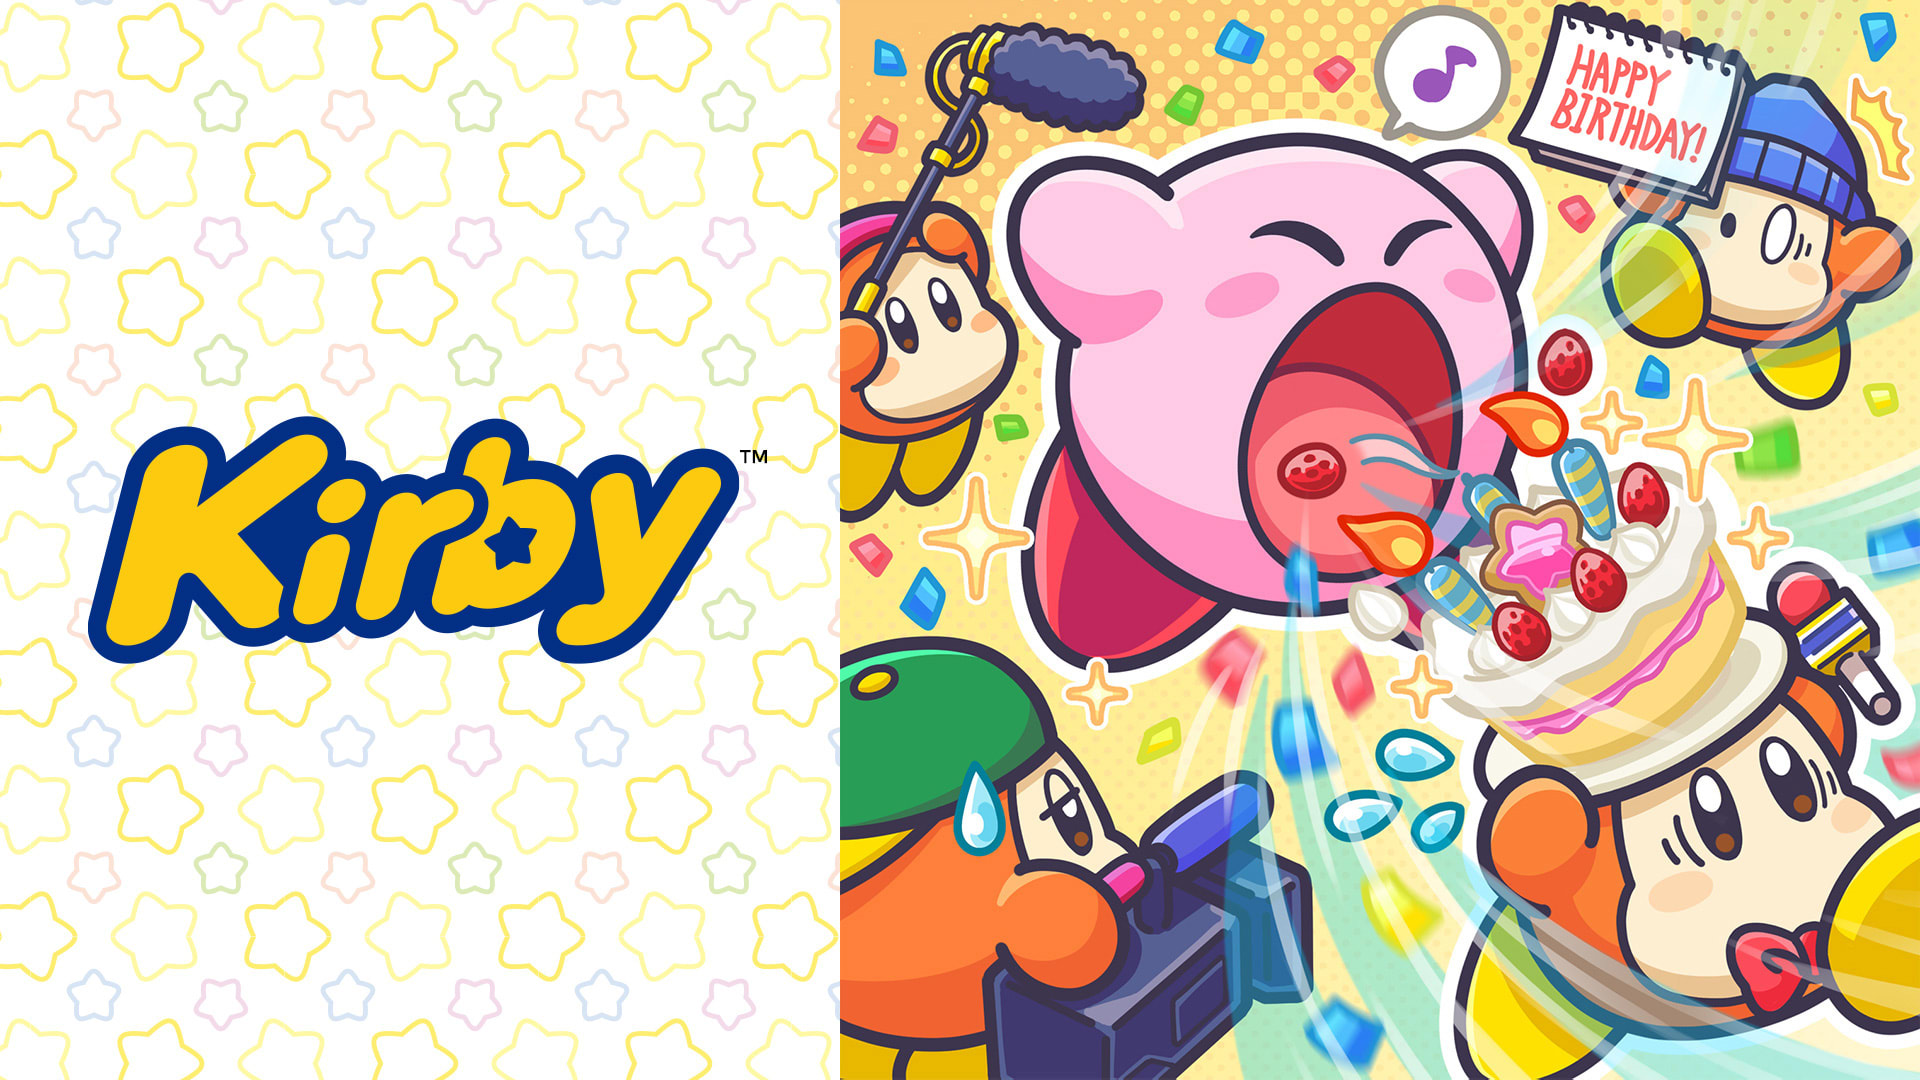 Happy birthday, Kirby! Hero